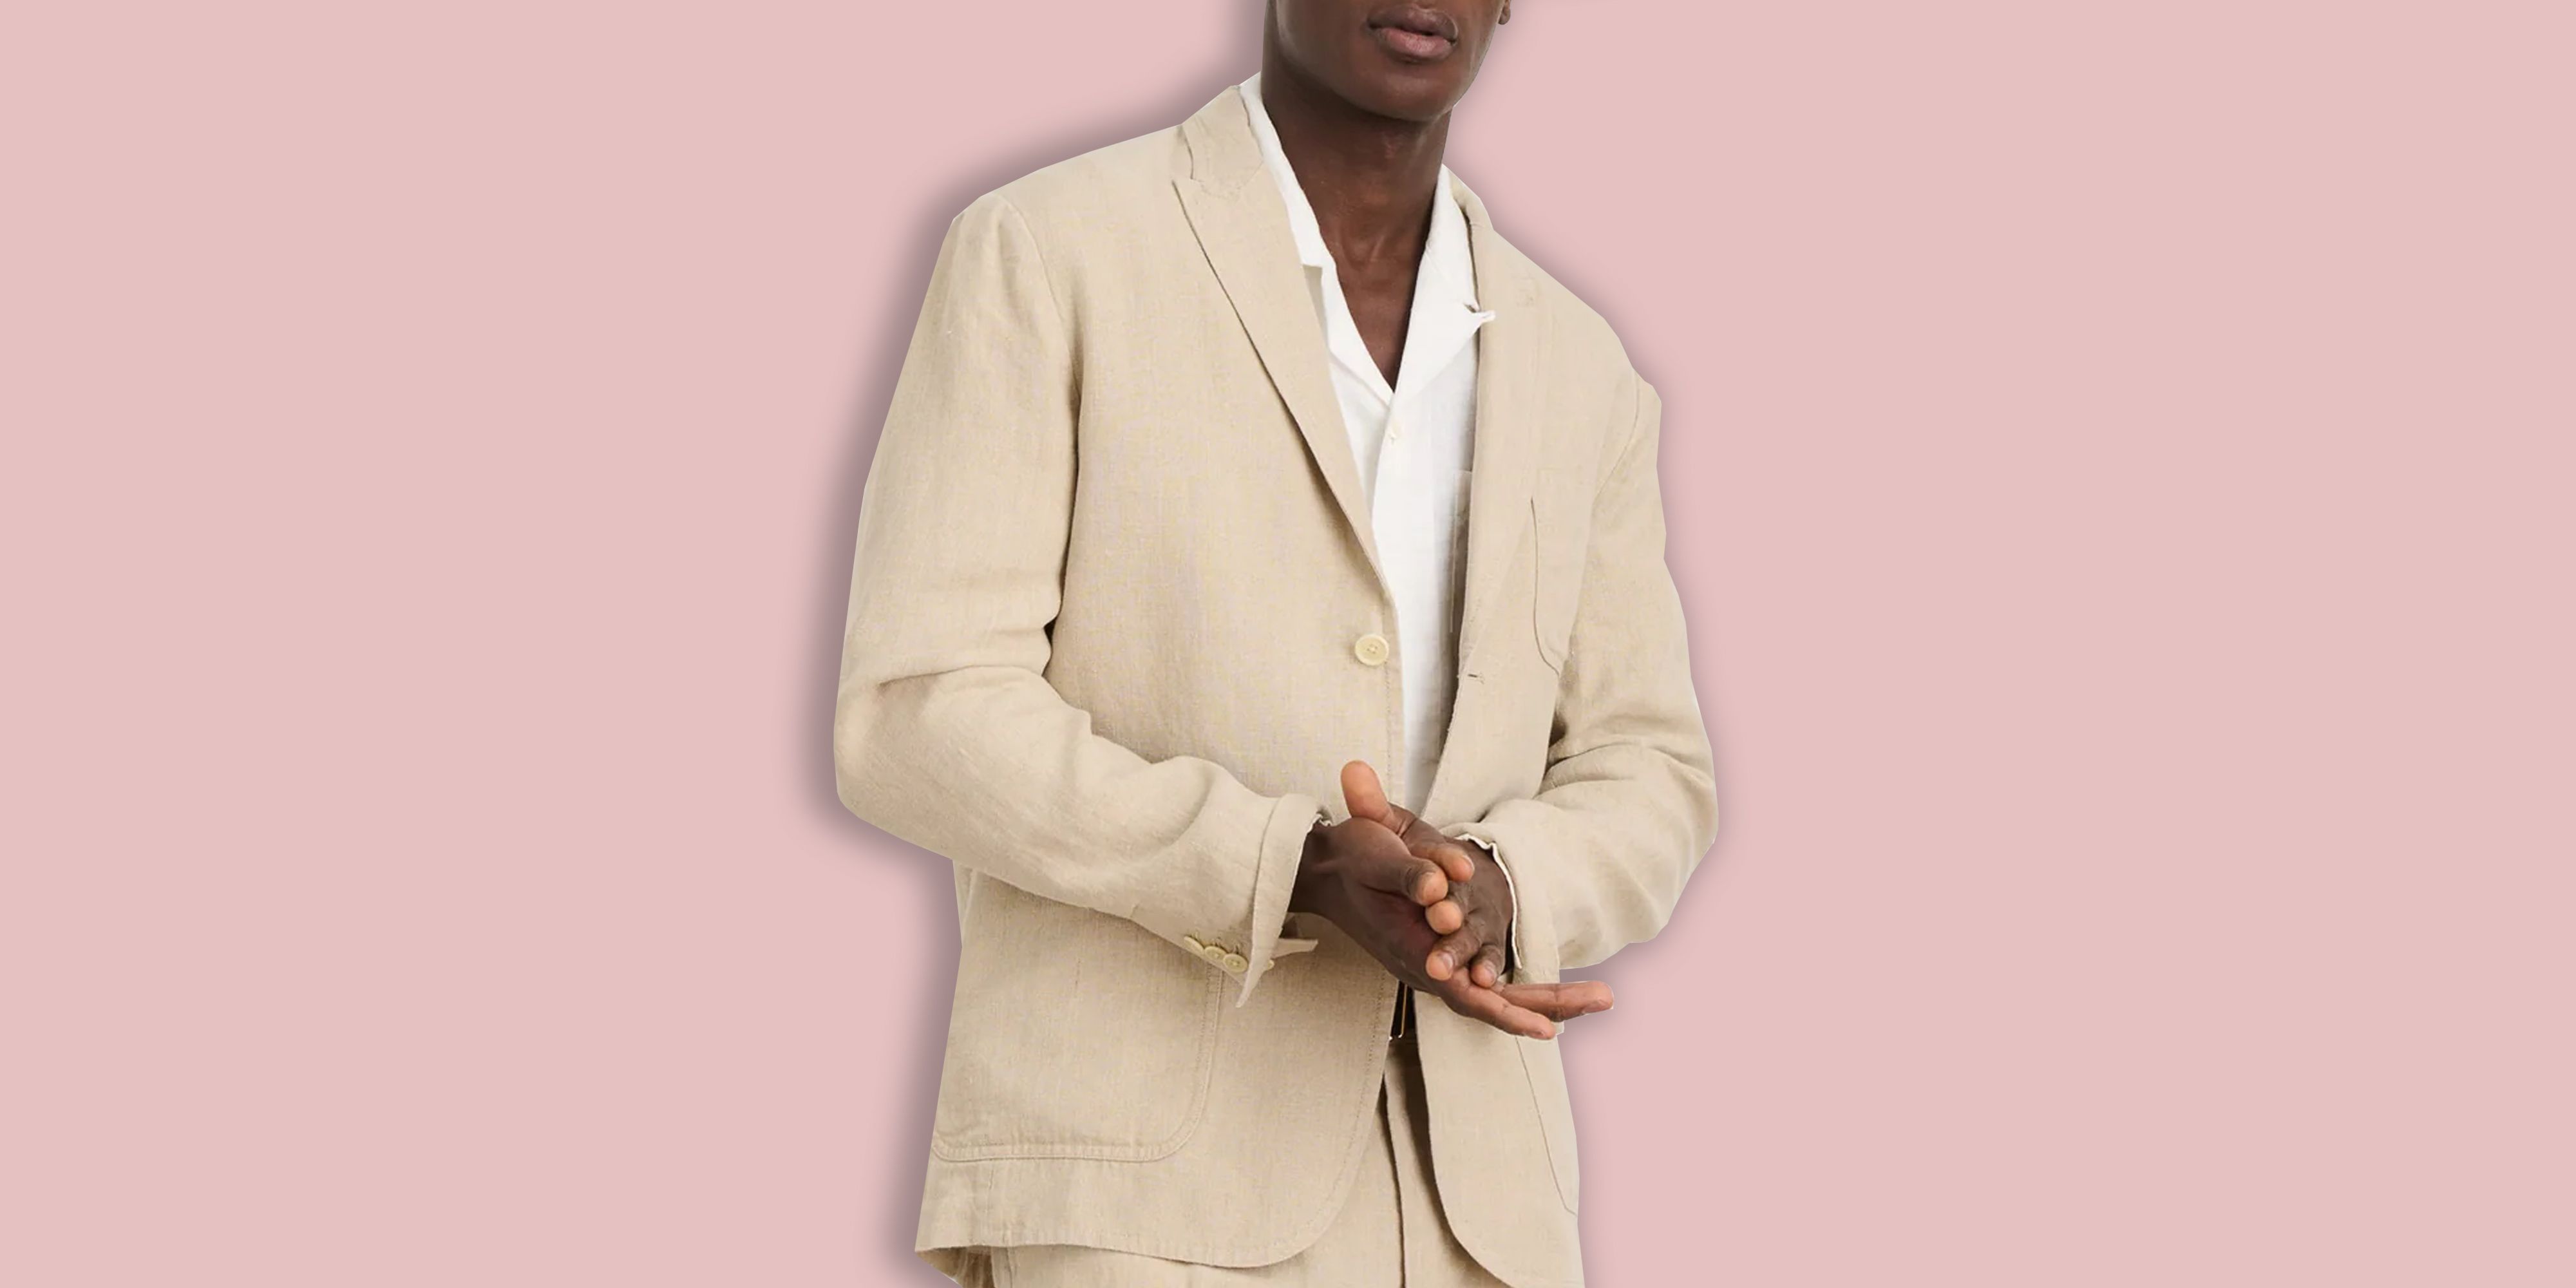 Tommy Hilfiger Mens Modern-Fit Flex Stretch Linen Suit Jacket